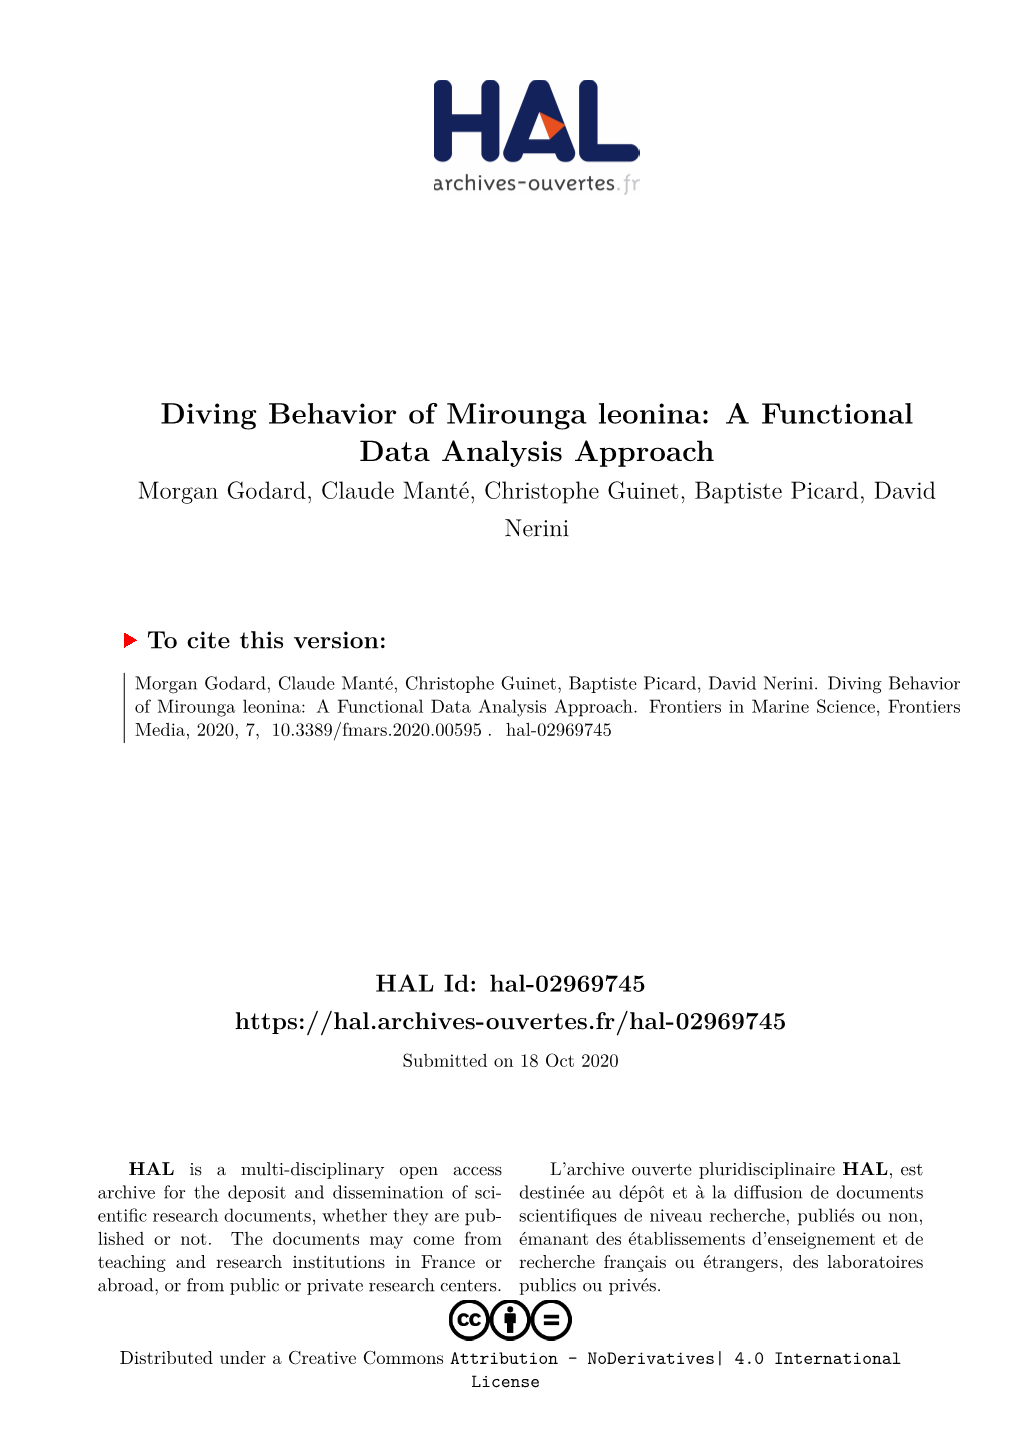 Diving Behavior of Mirounga Leonina: a Functional Data Analysis Approach Morgan Godard, Claude Manté, Christophe Guinet, Baptiste Picard, David Nerini